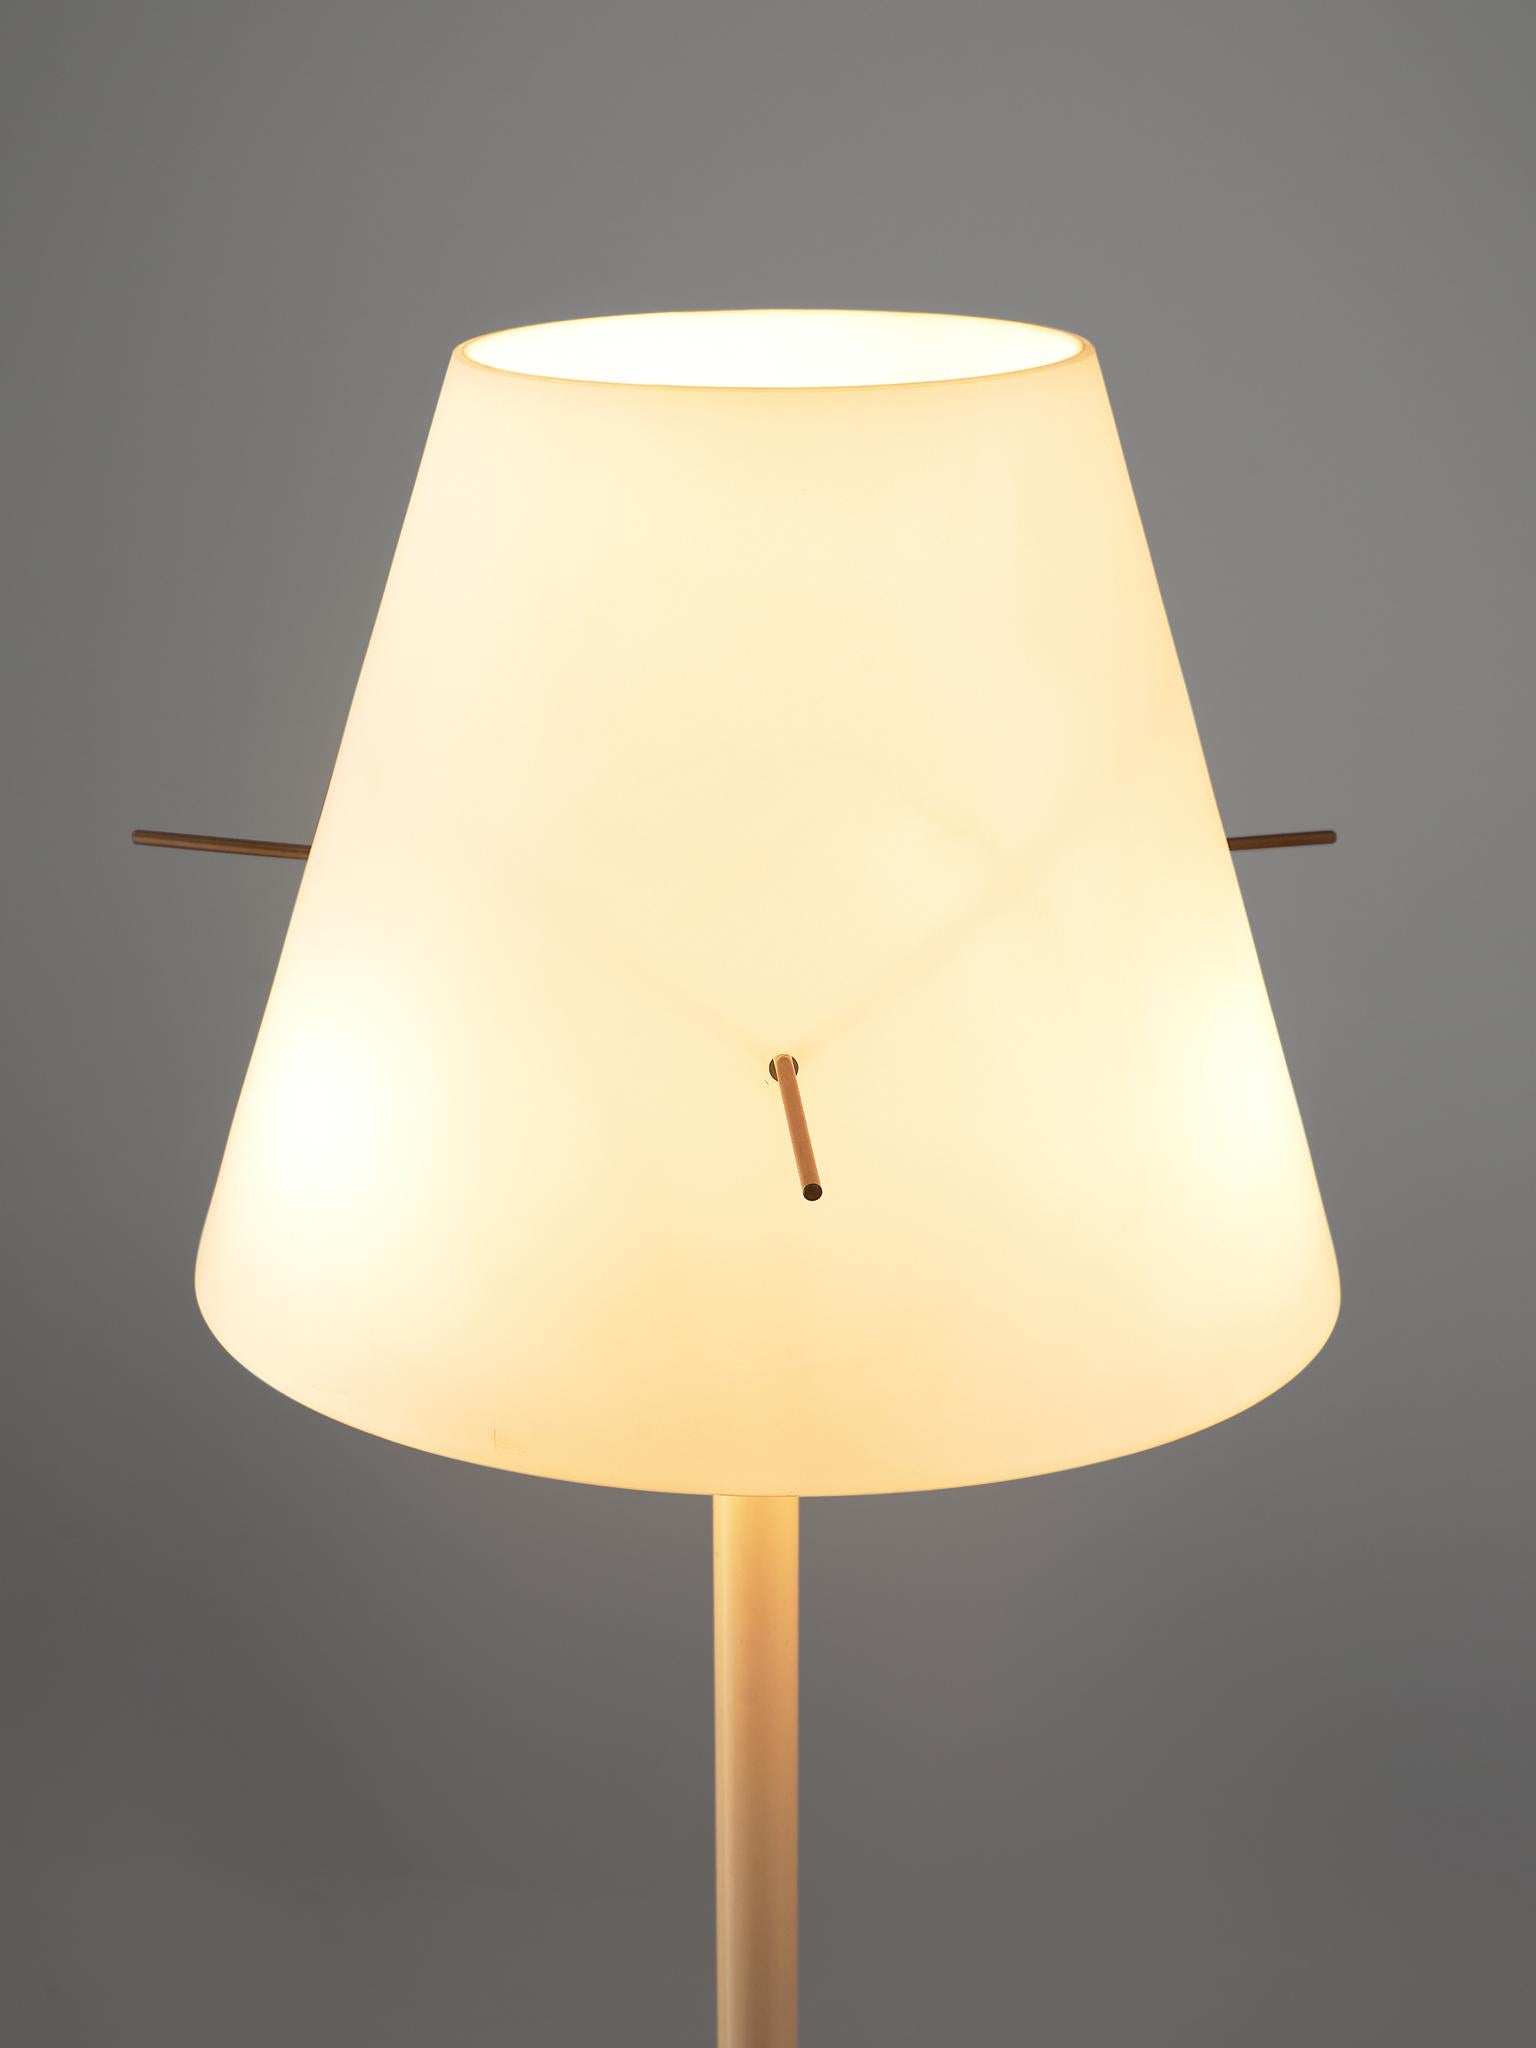 Mid-20th Century Italian Floor Lamp with Brass Details